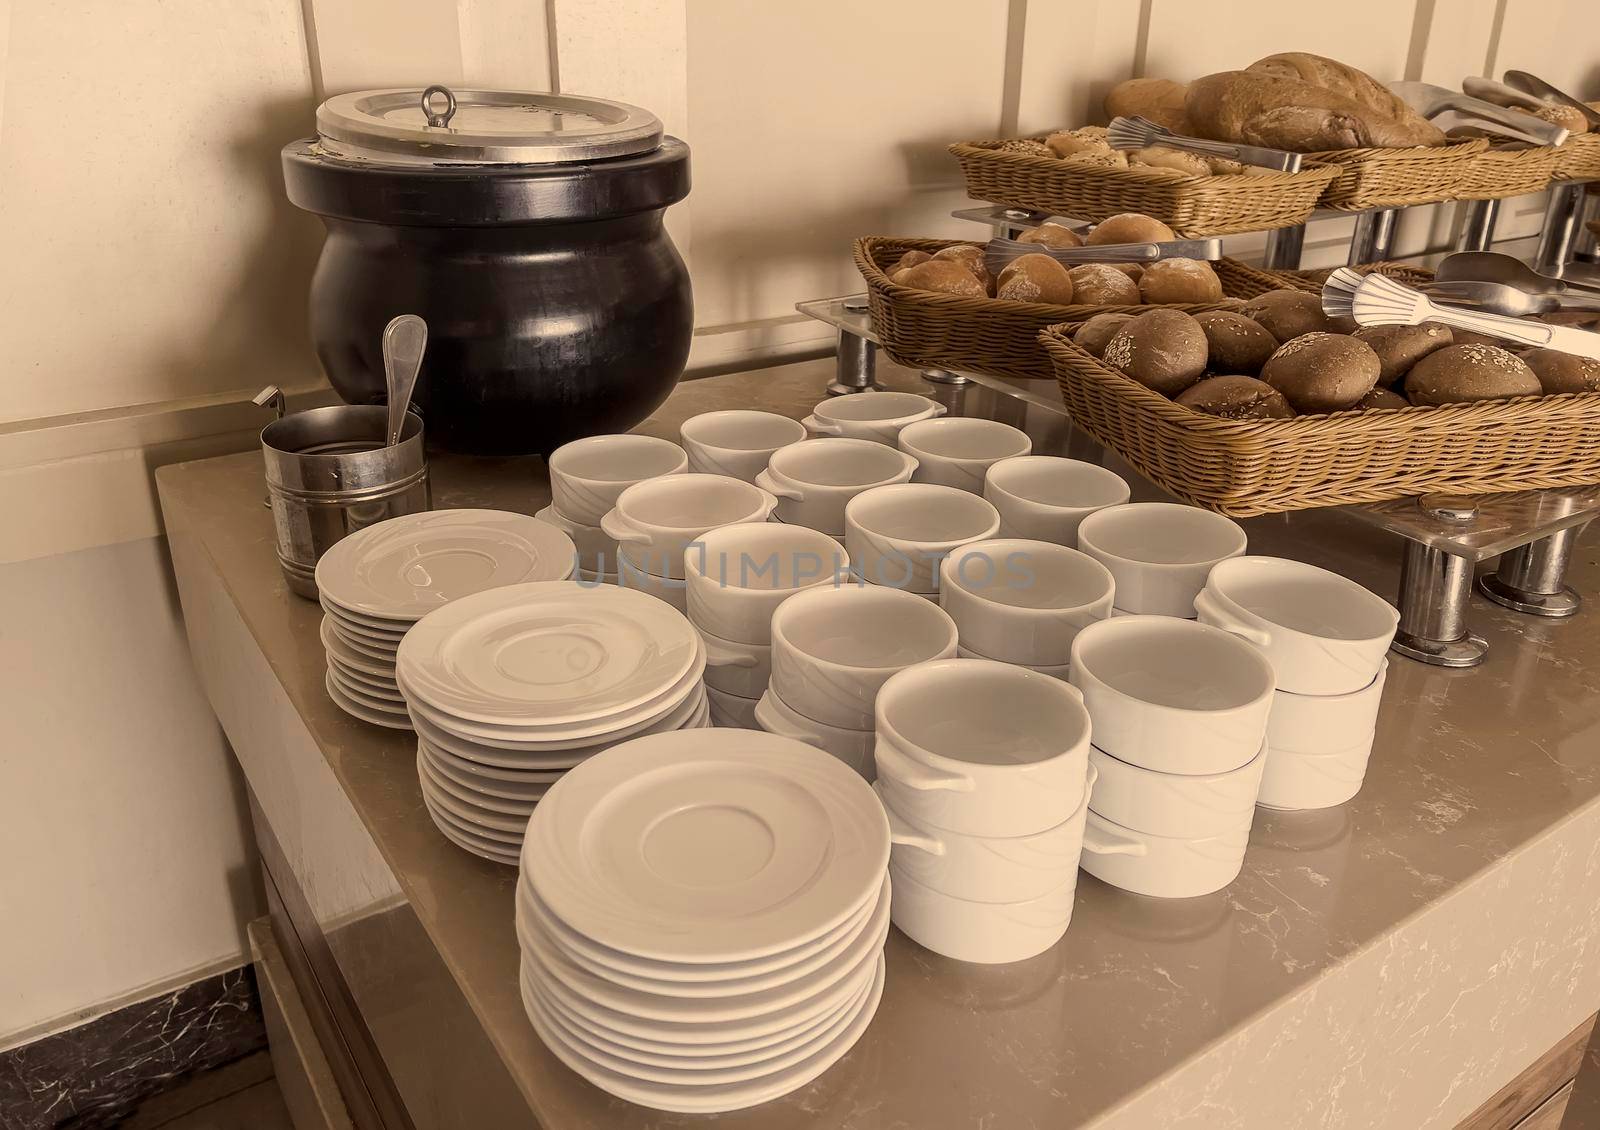 Pure white ceramic tableware for tea or coffee by georgina198